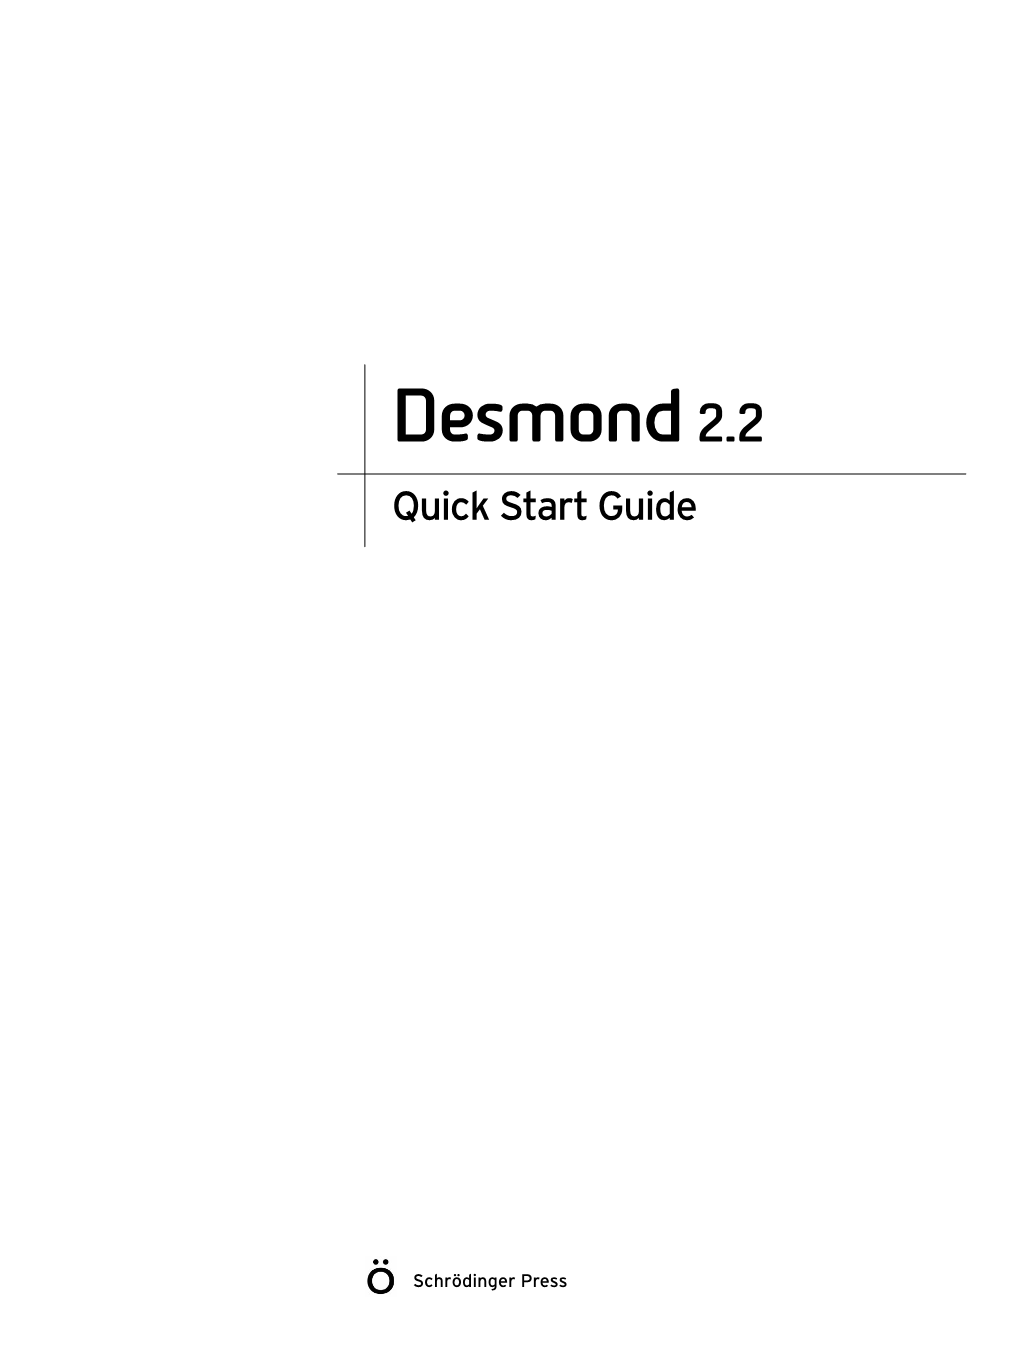 Desmond Quick Start Guide